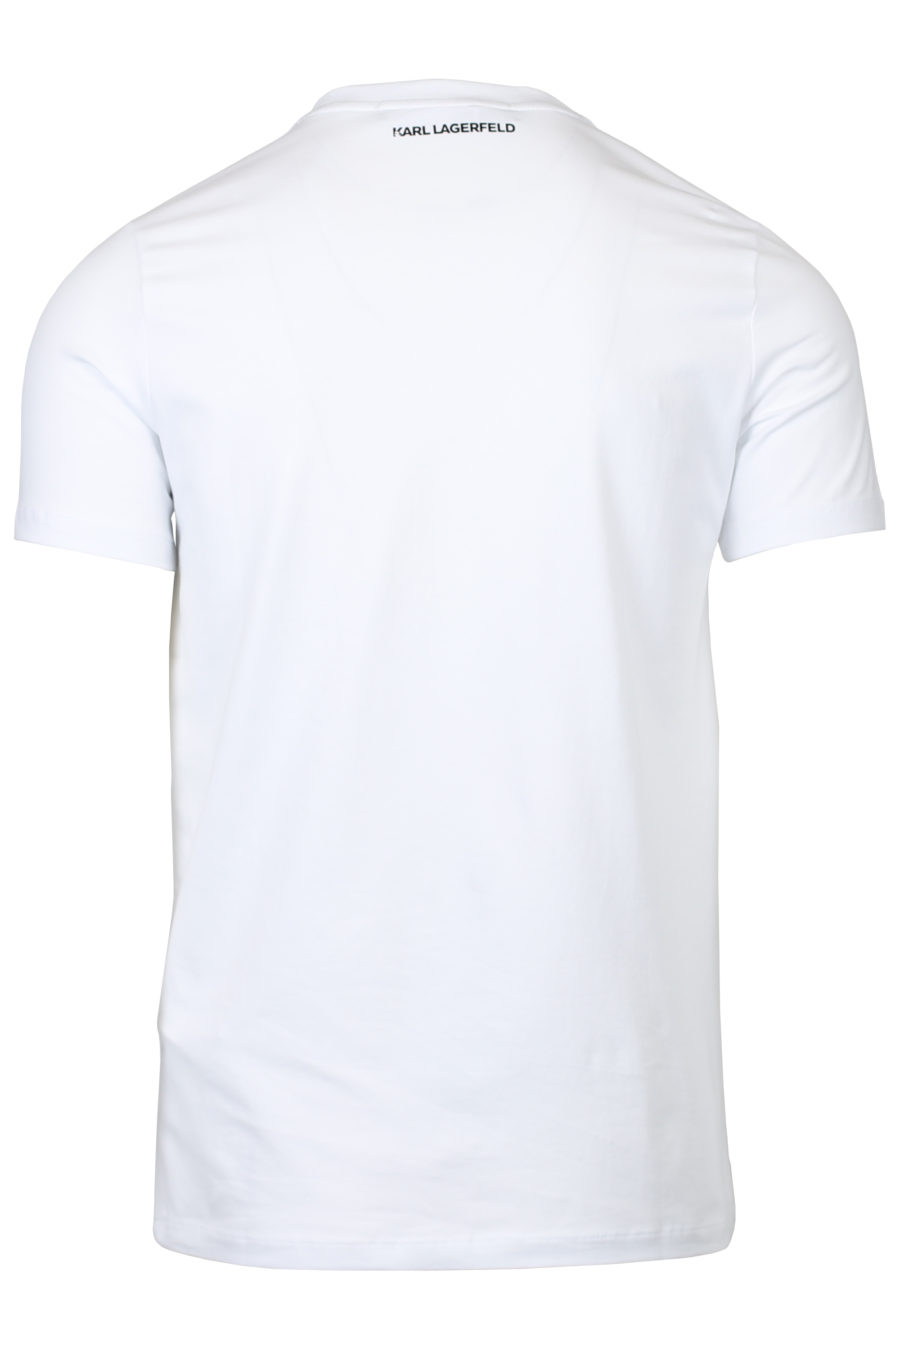 Camiseta blanca logo color negro - IMG 2040